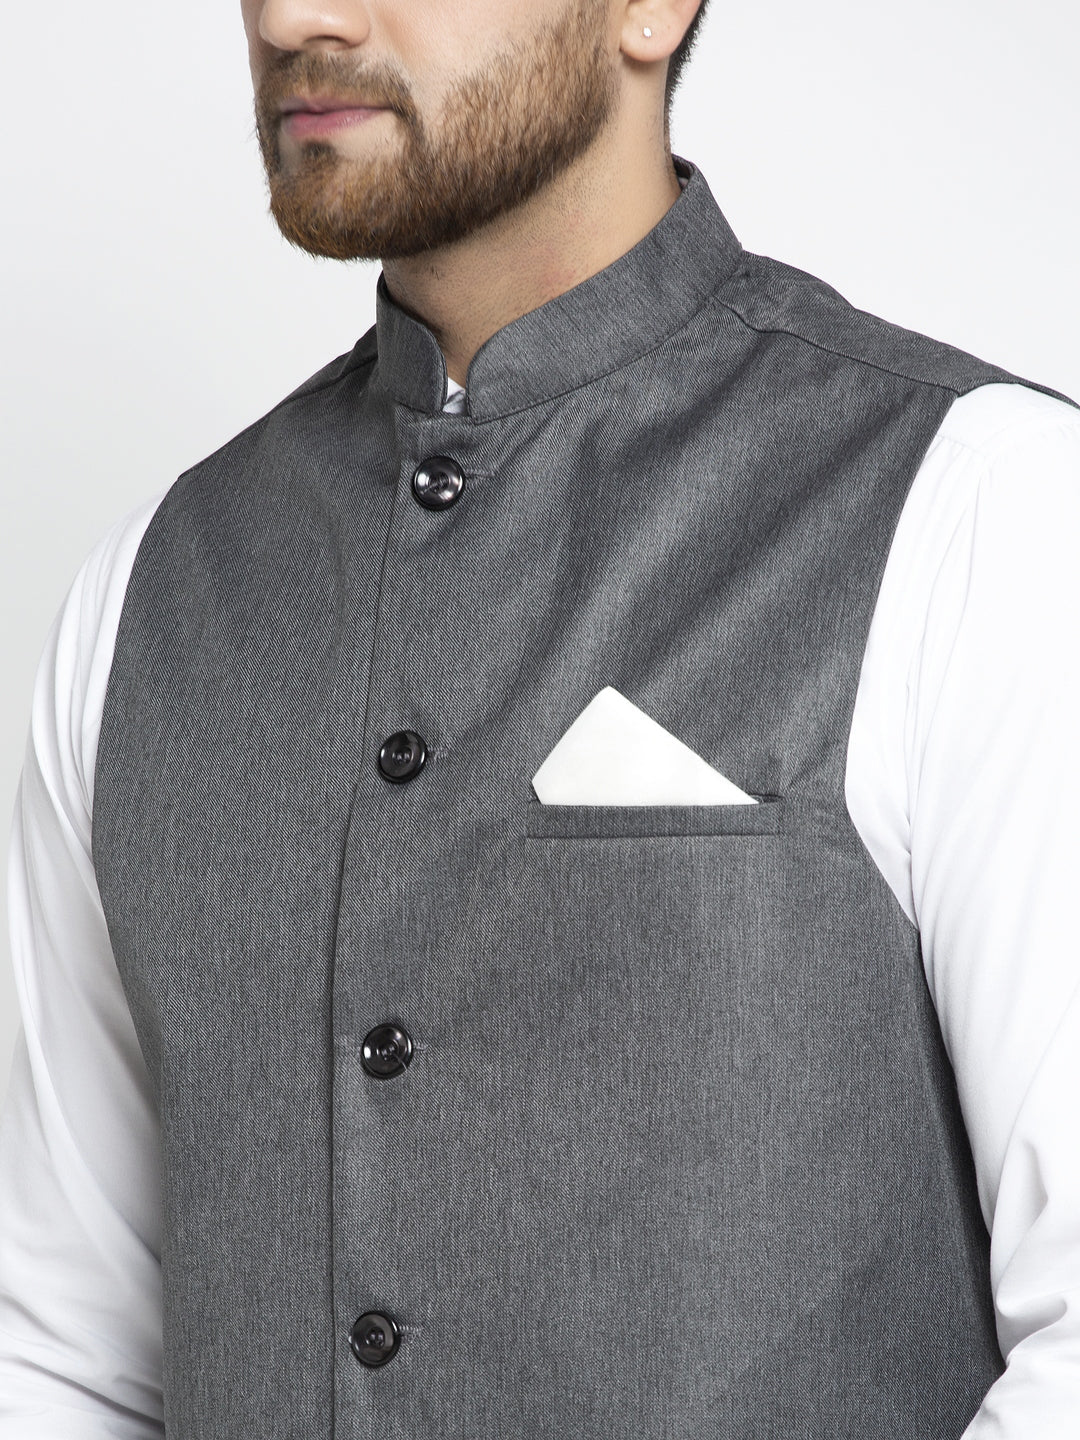 Jompers Men's Grey Melange Solid Nehru Jacket